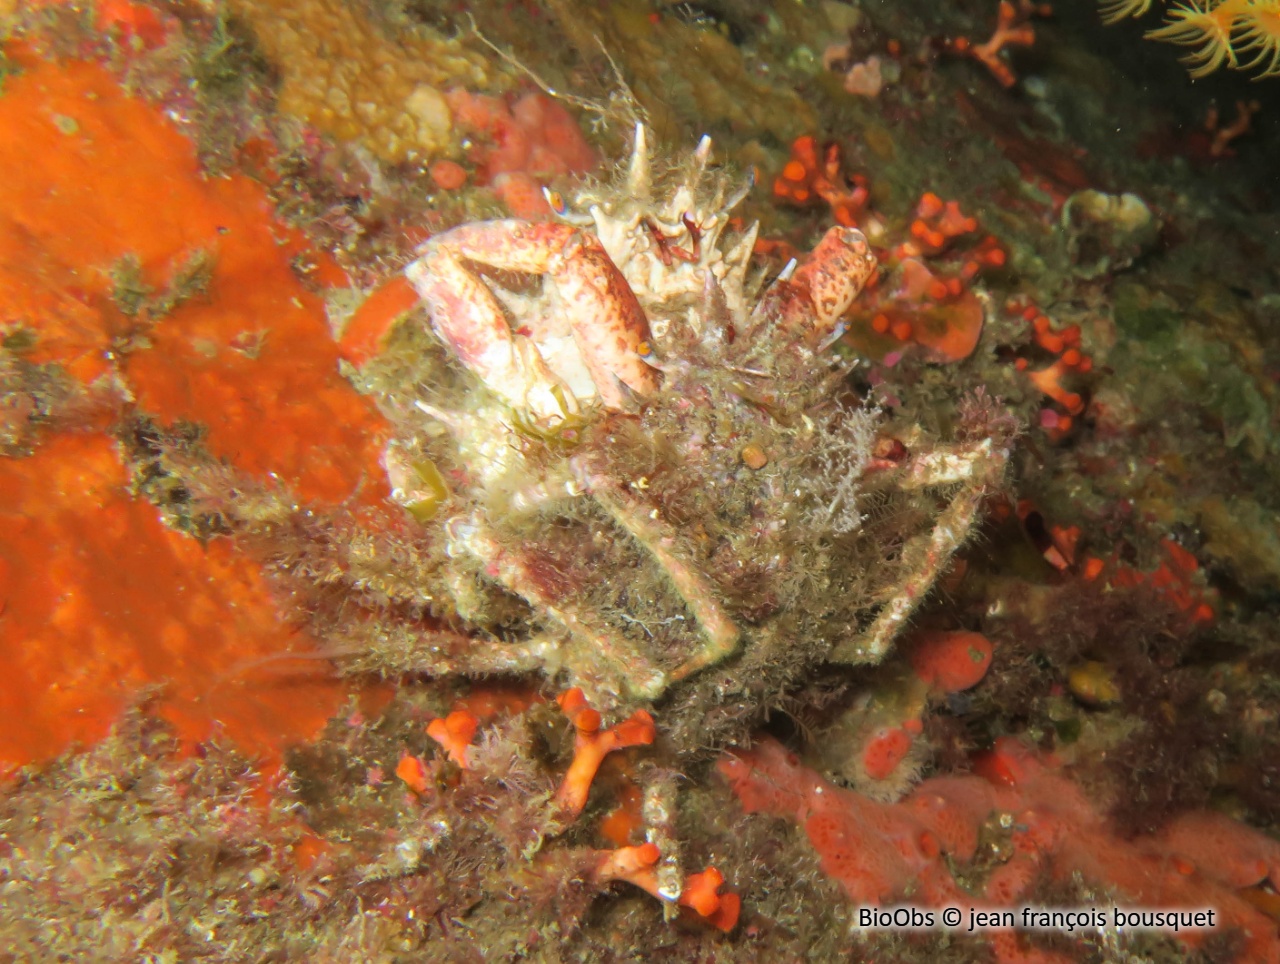 Araignée de mer hérissée - Neomaja goltziana - jean françois bousquet - BioObs